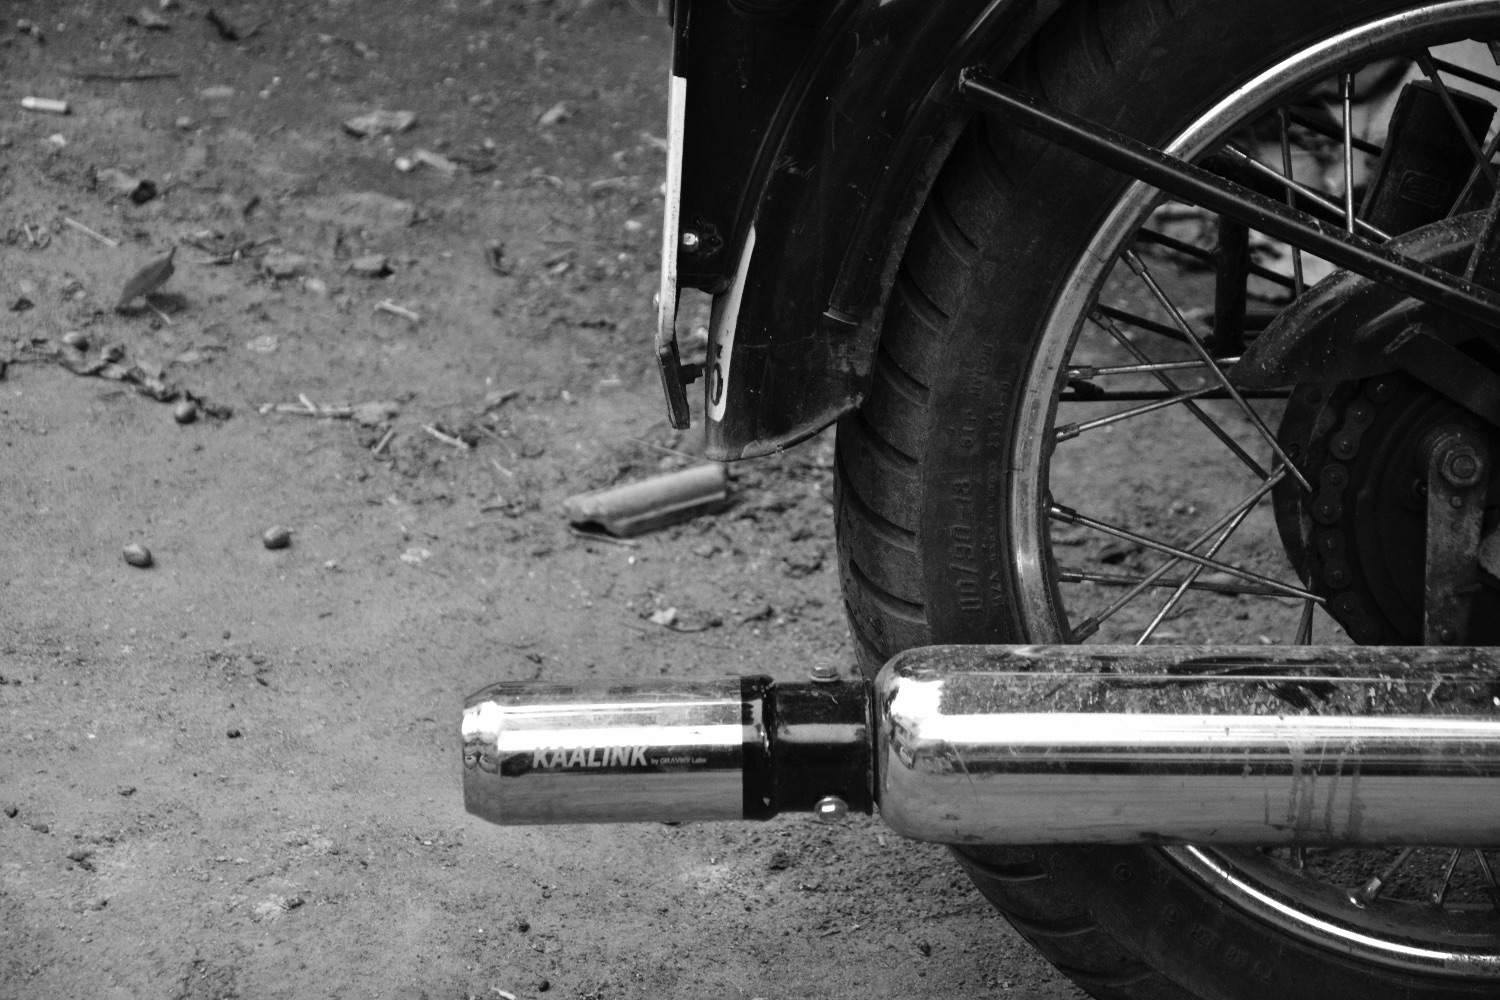 kickstarter ink air pollution capture on motorcycle